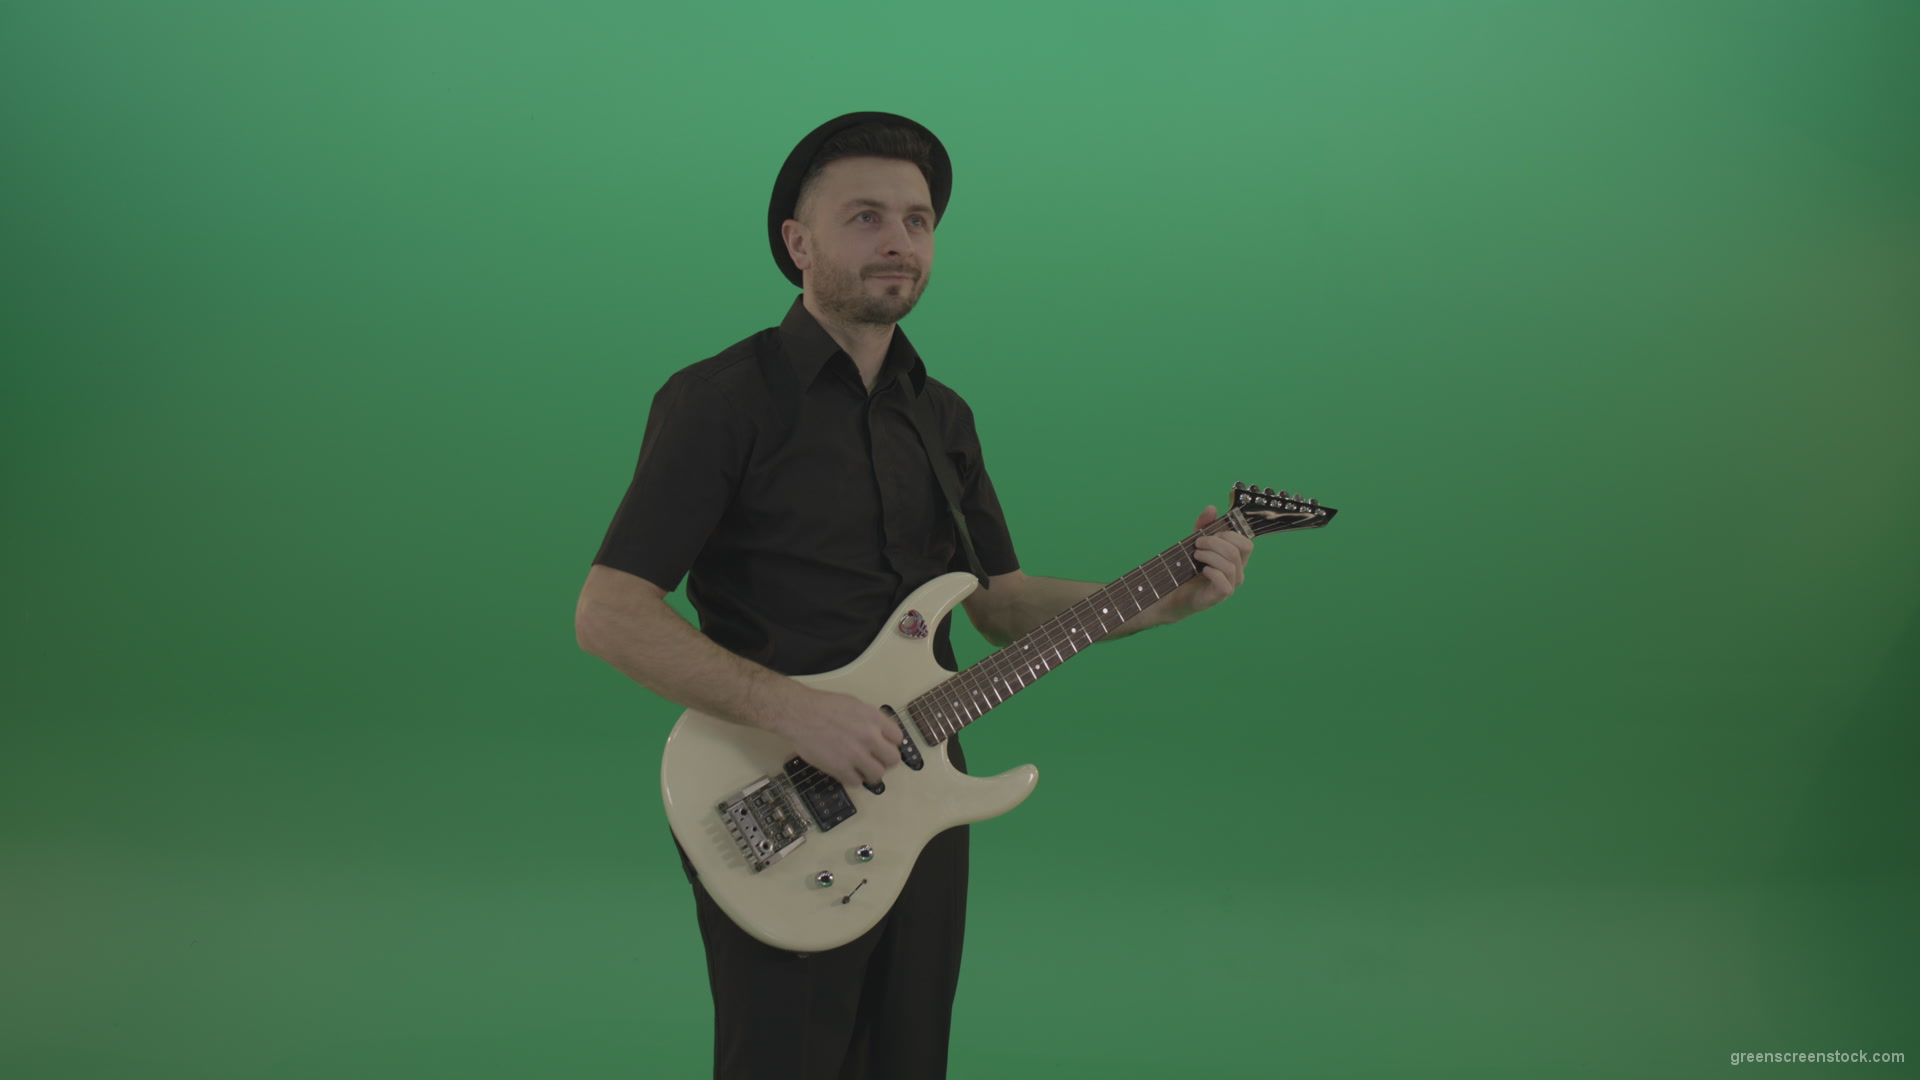 Man-in-black-playing-white-guitar-on-green-screen-1_006 Green Screen Stock